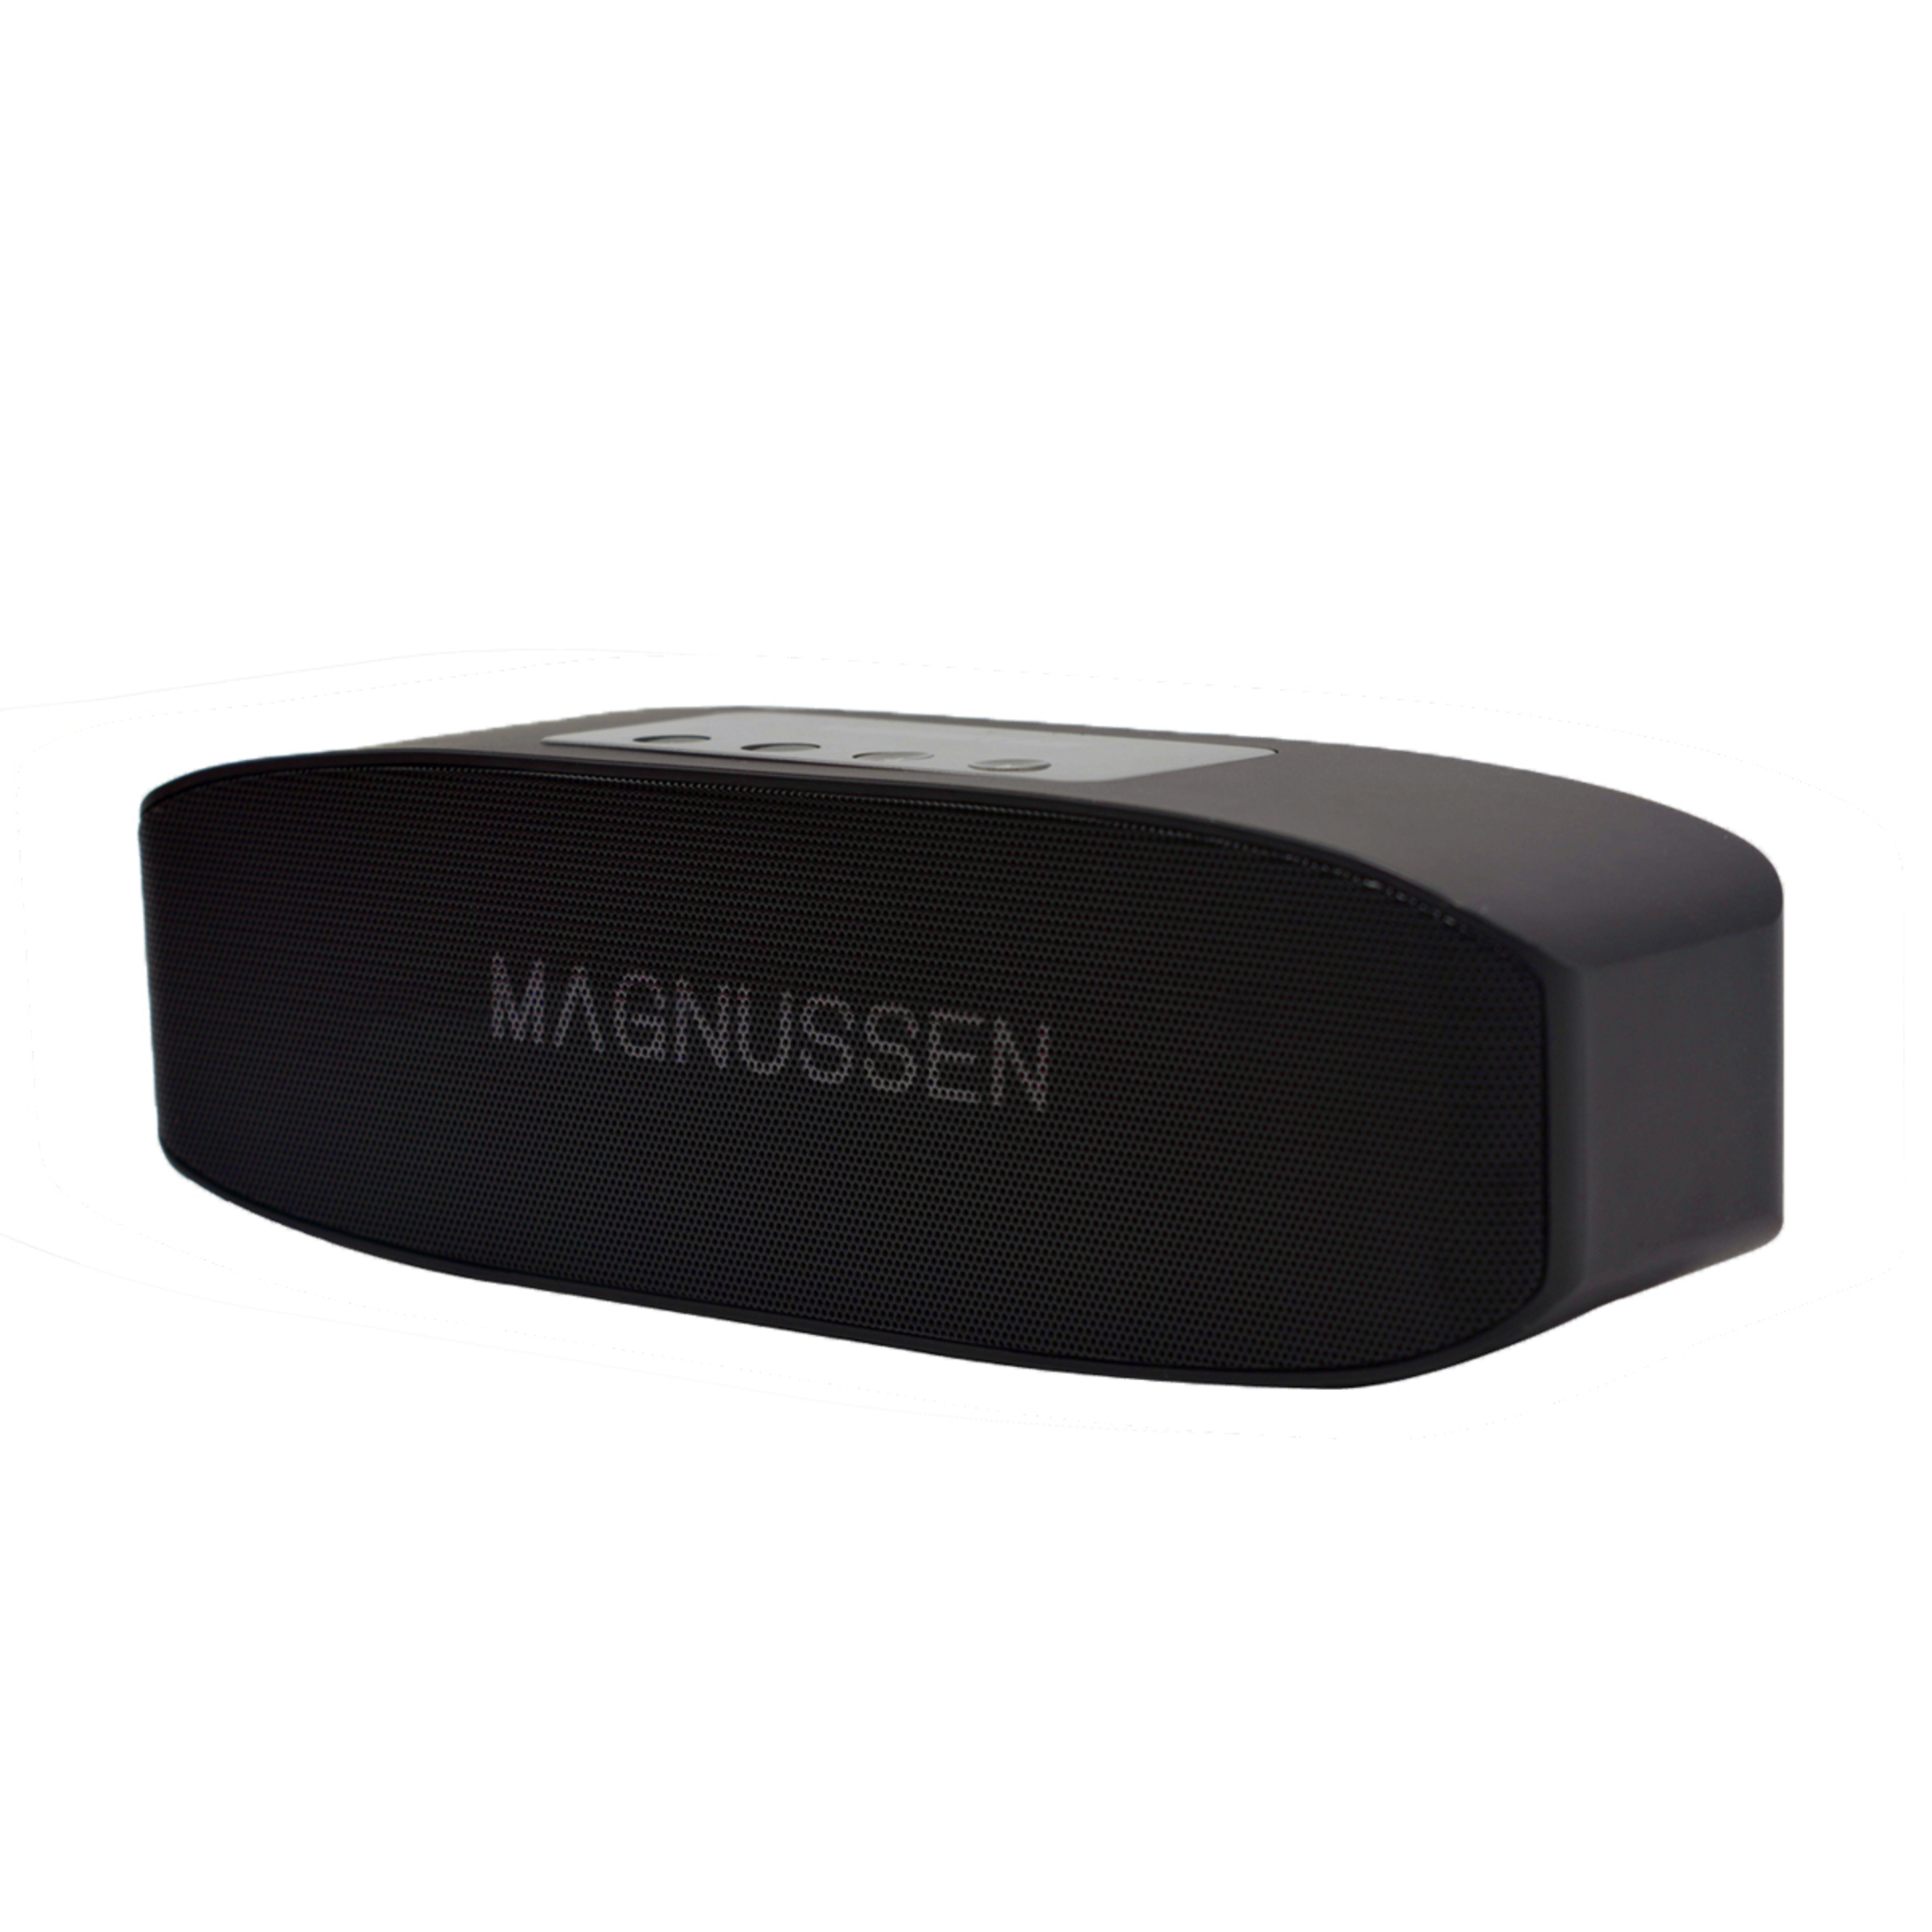 Altavoz Bluetooth Magnussen S3 - negro - 